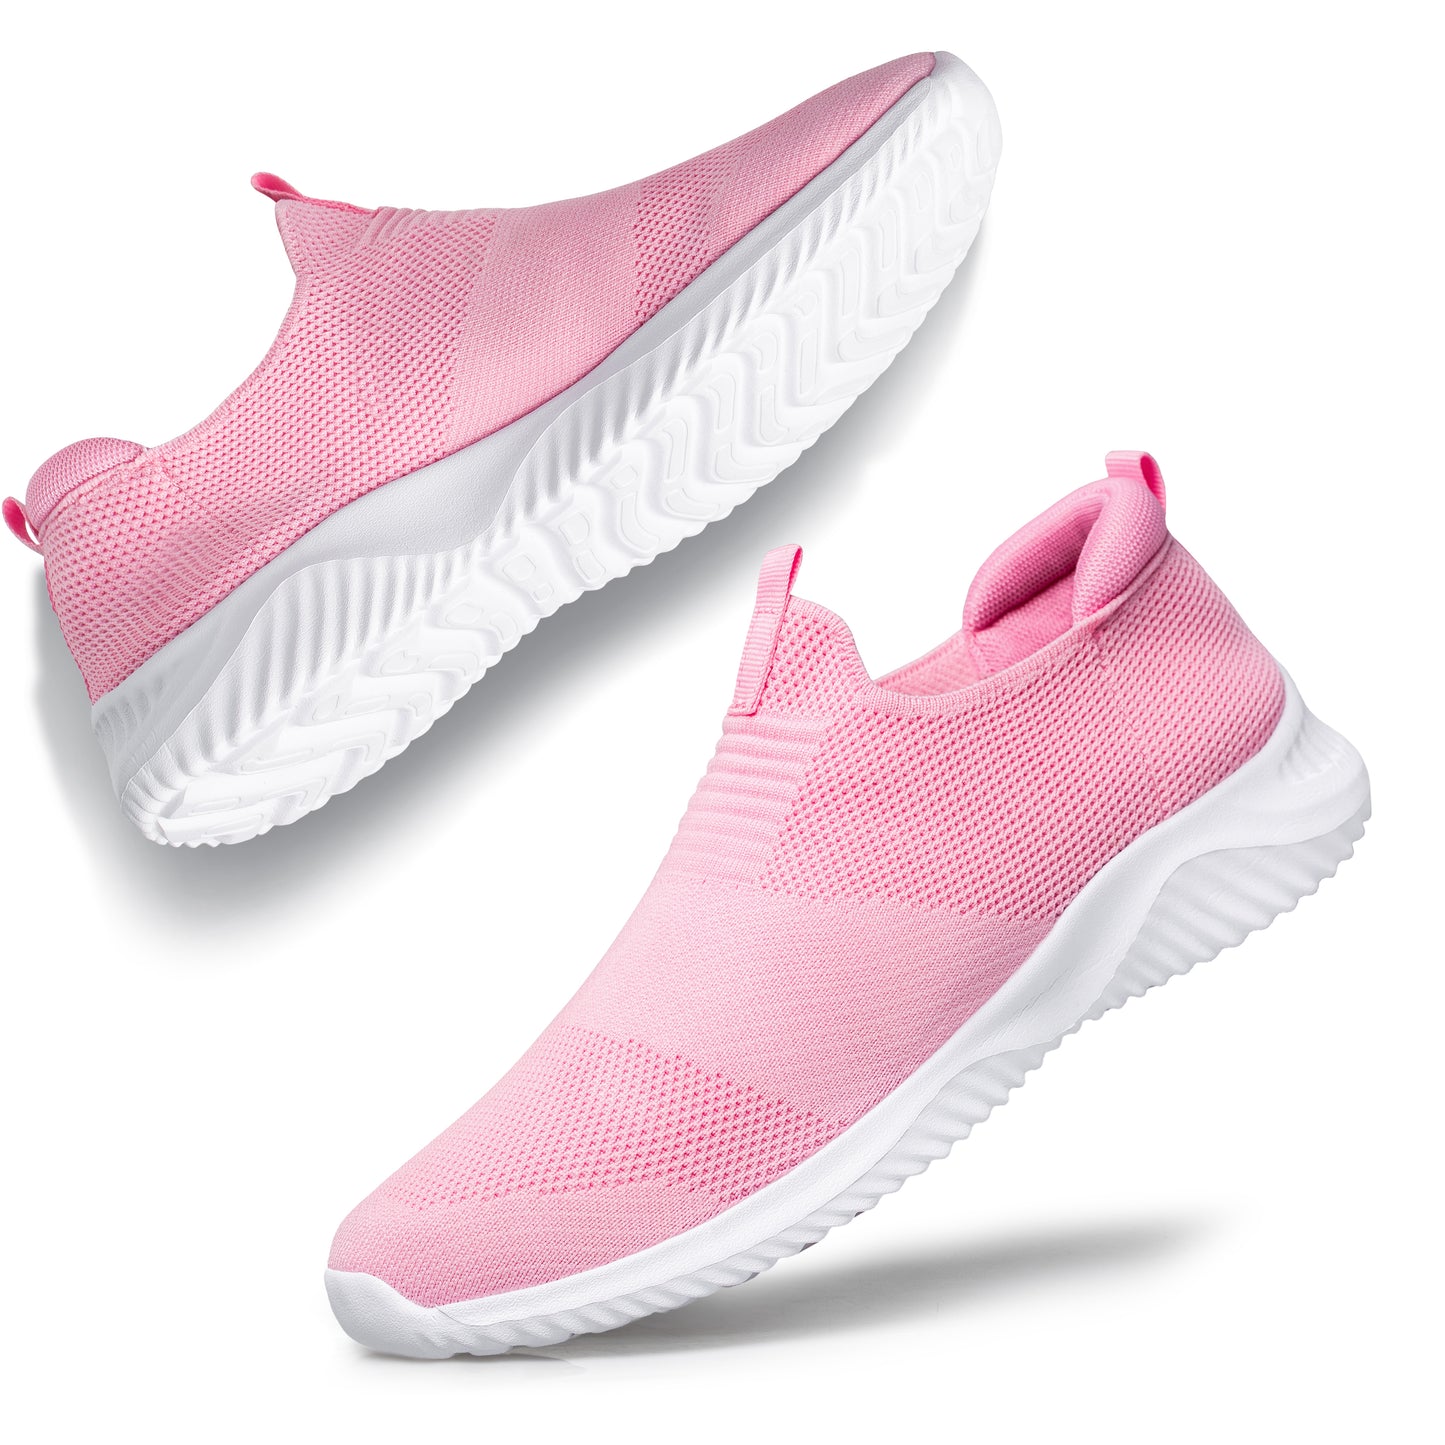 YHOON Women's Walking Shoes - Slip on Sneakers Lightweight Tennis Shoes Sock Sneakers